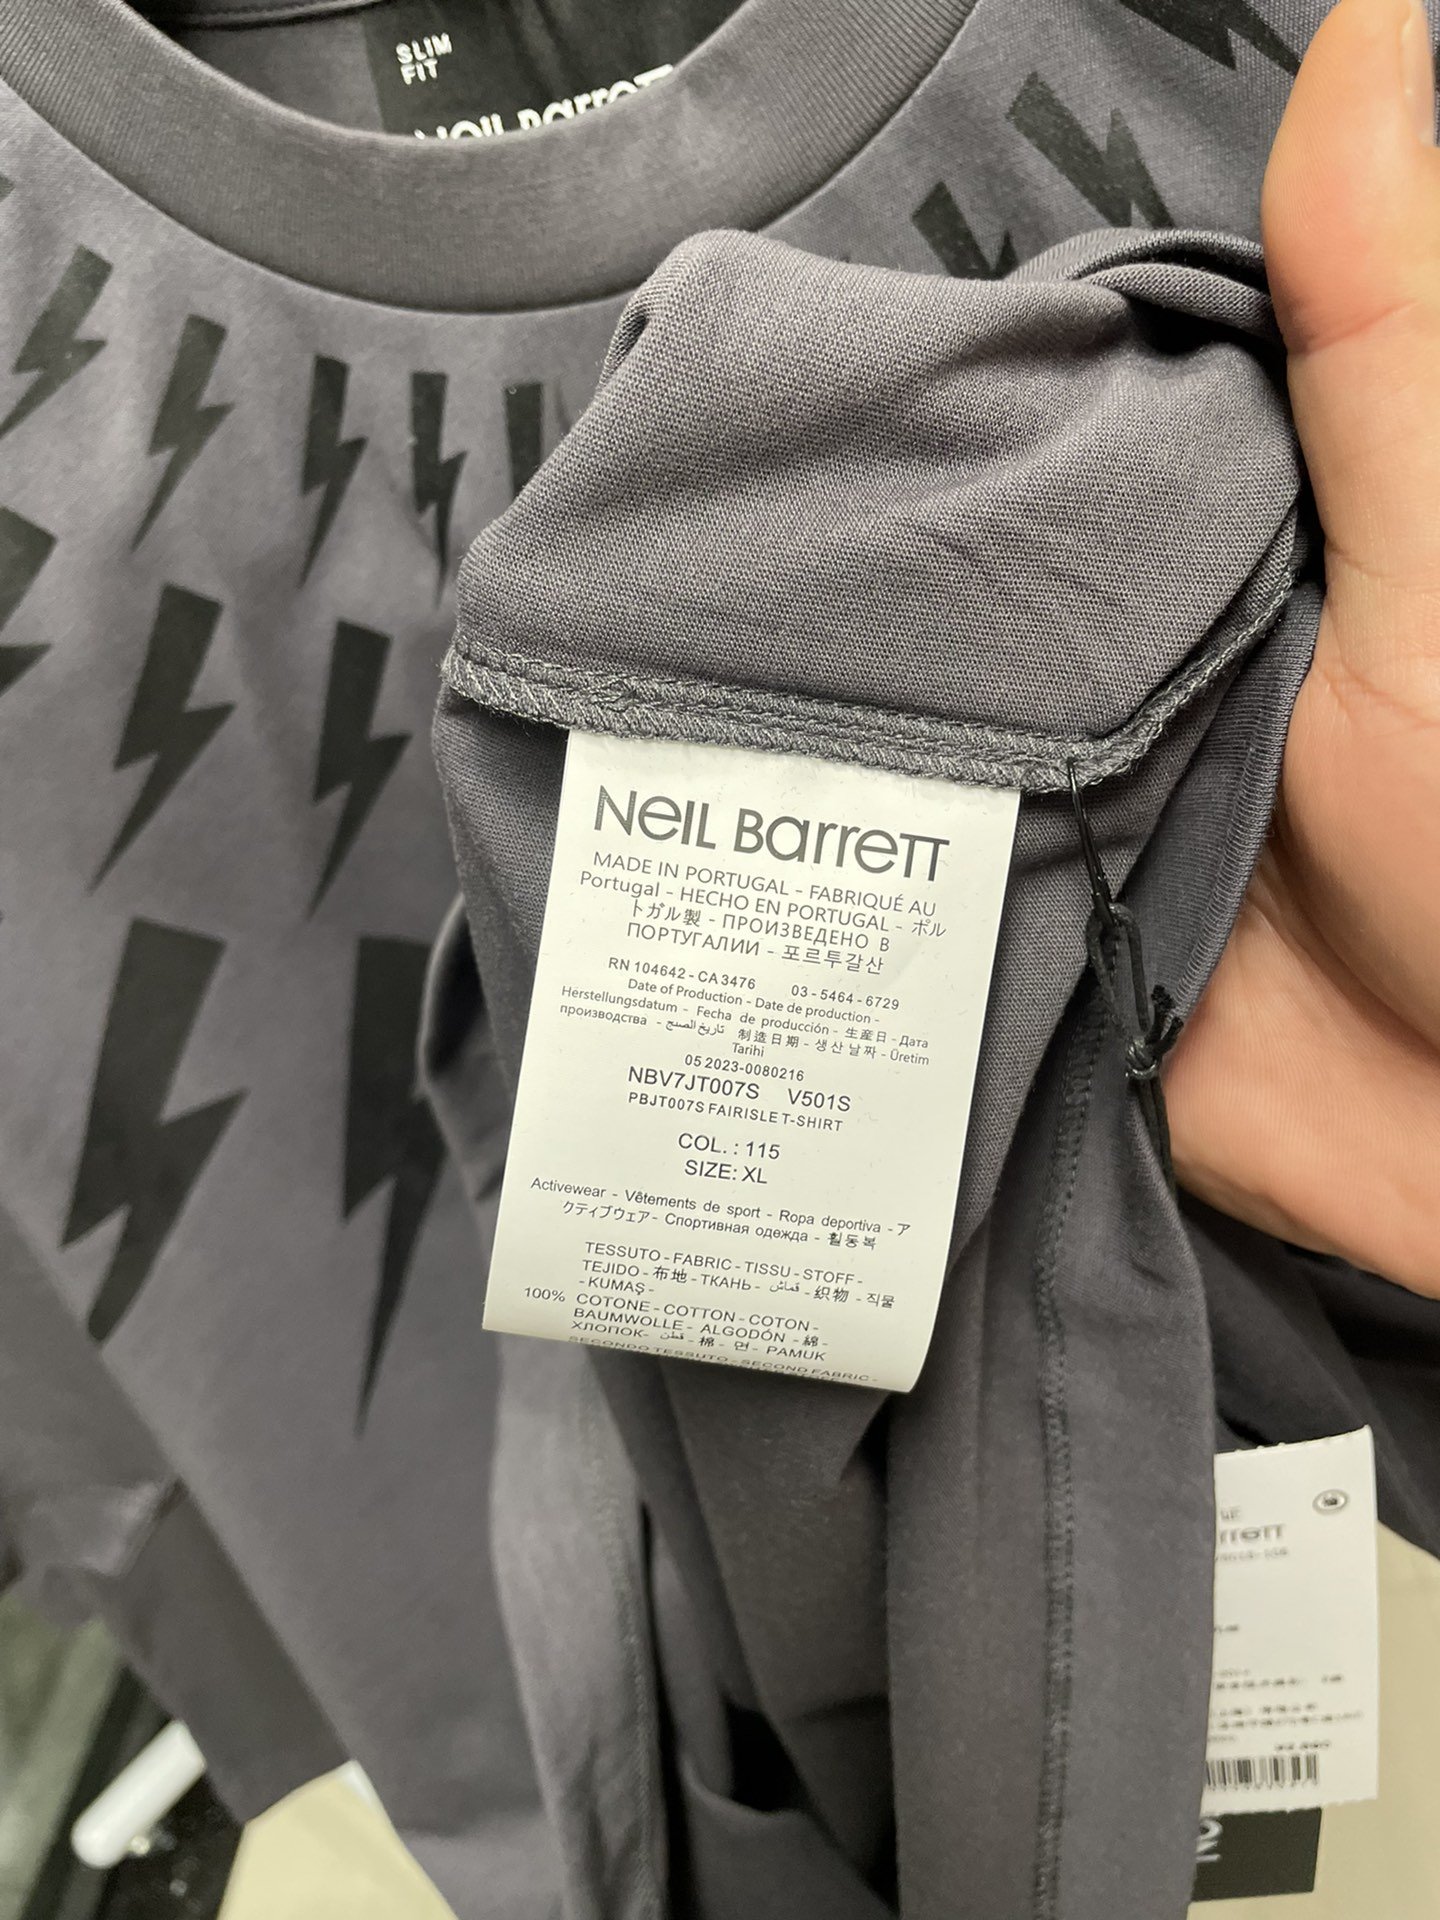 NB专柜品质天花板级别这款灰色闪电T恤绝对是时尚界的璀璨明星！它以其独特的设计和出色的品质成功吸引了无数